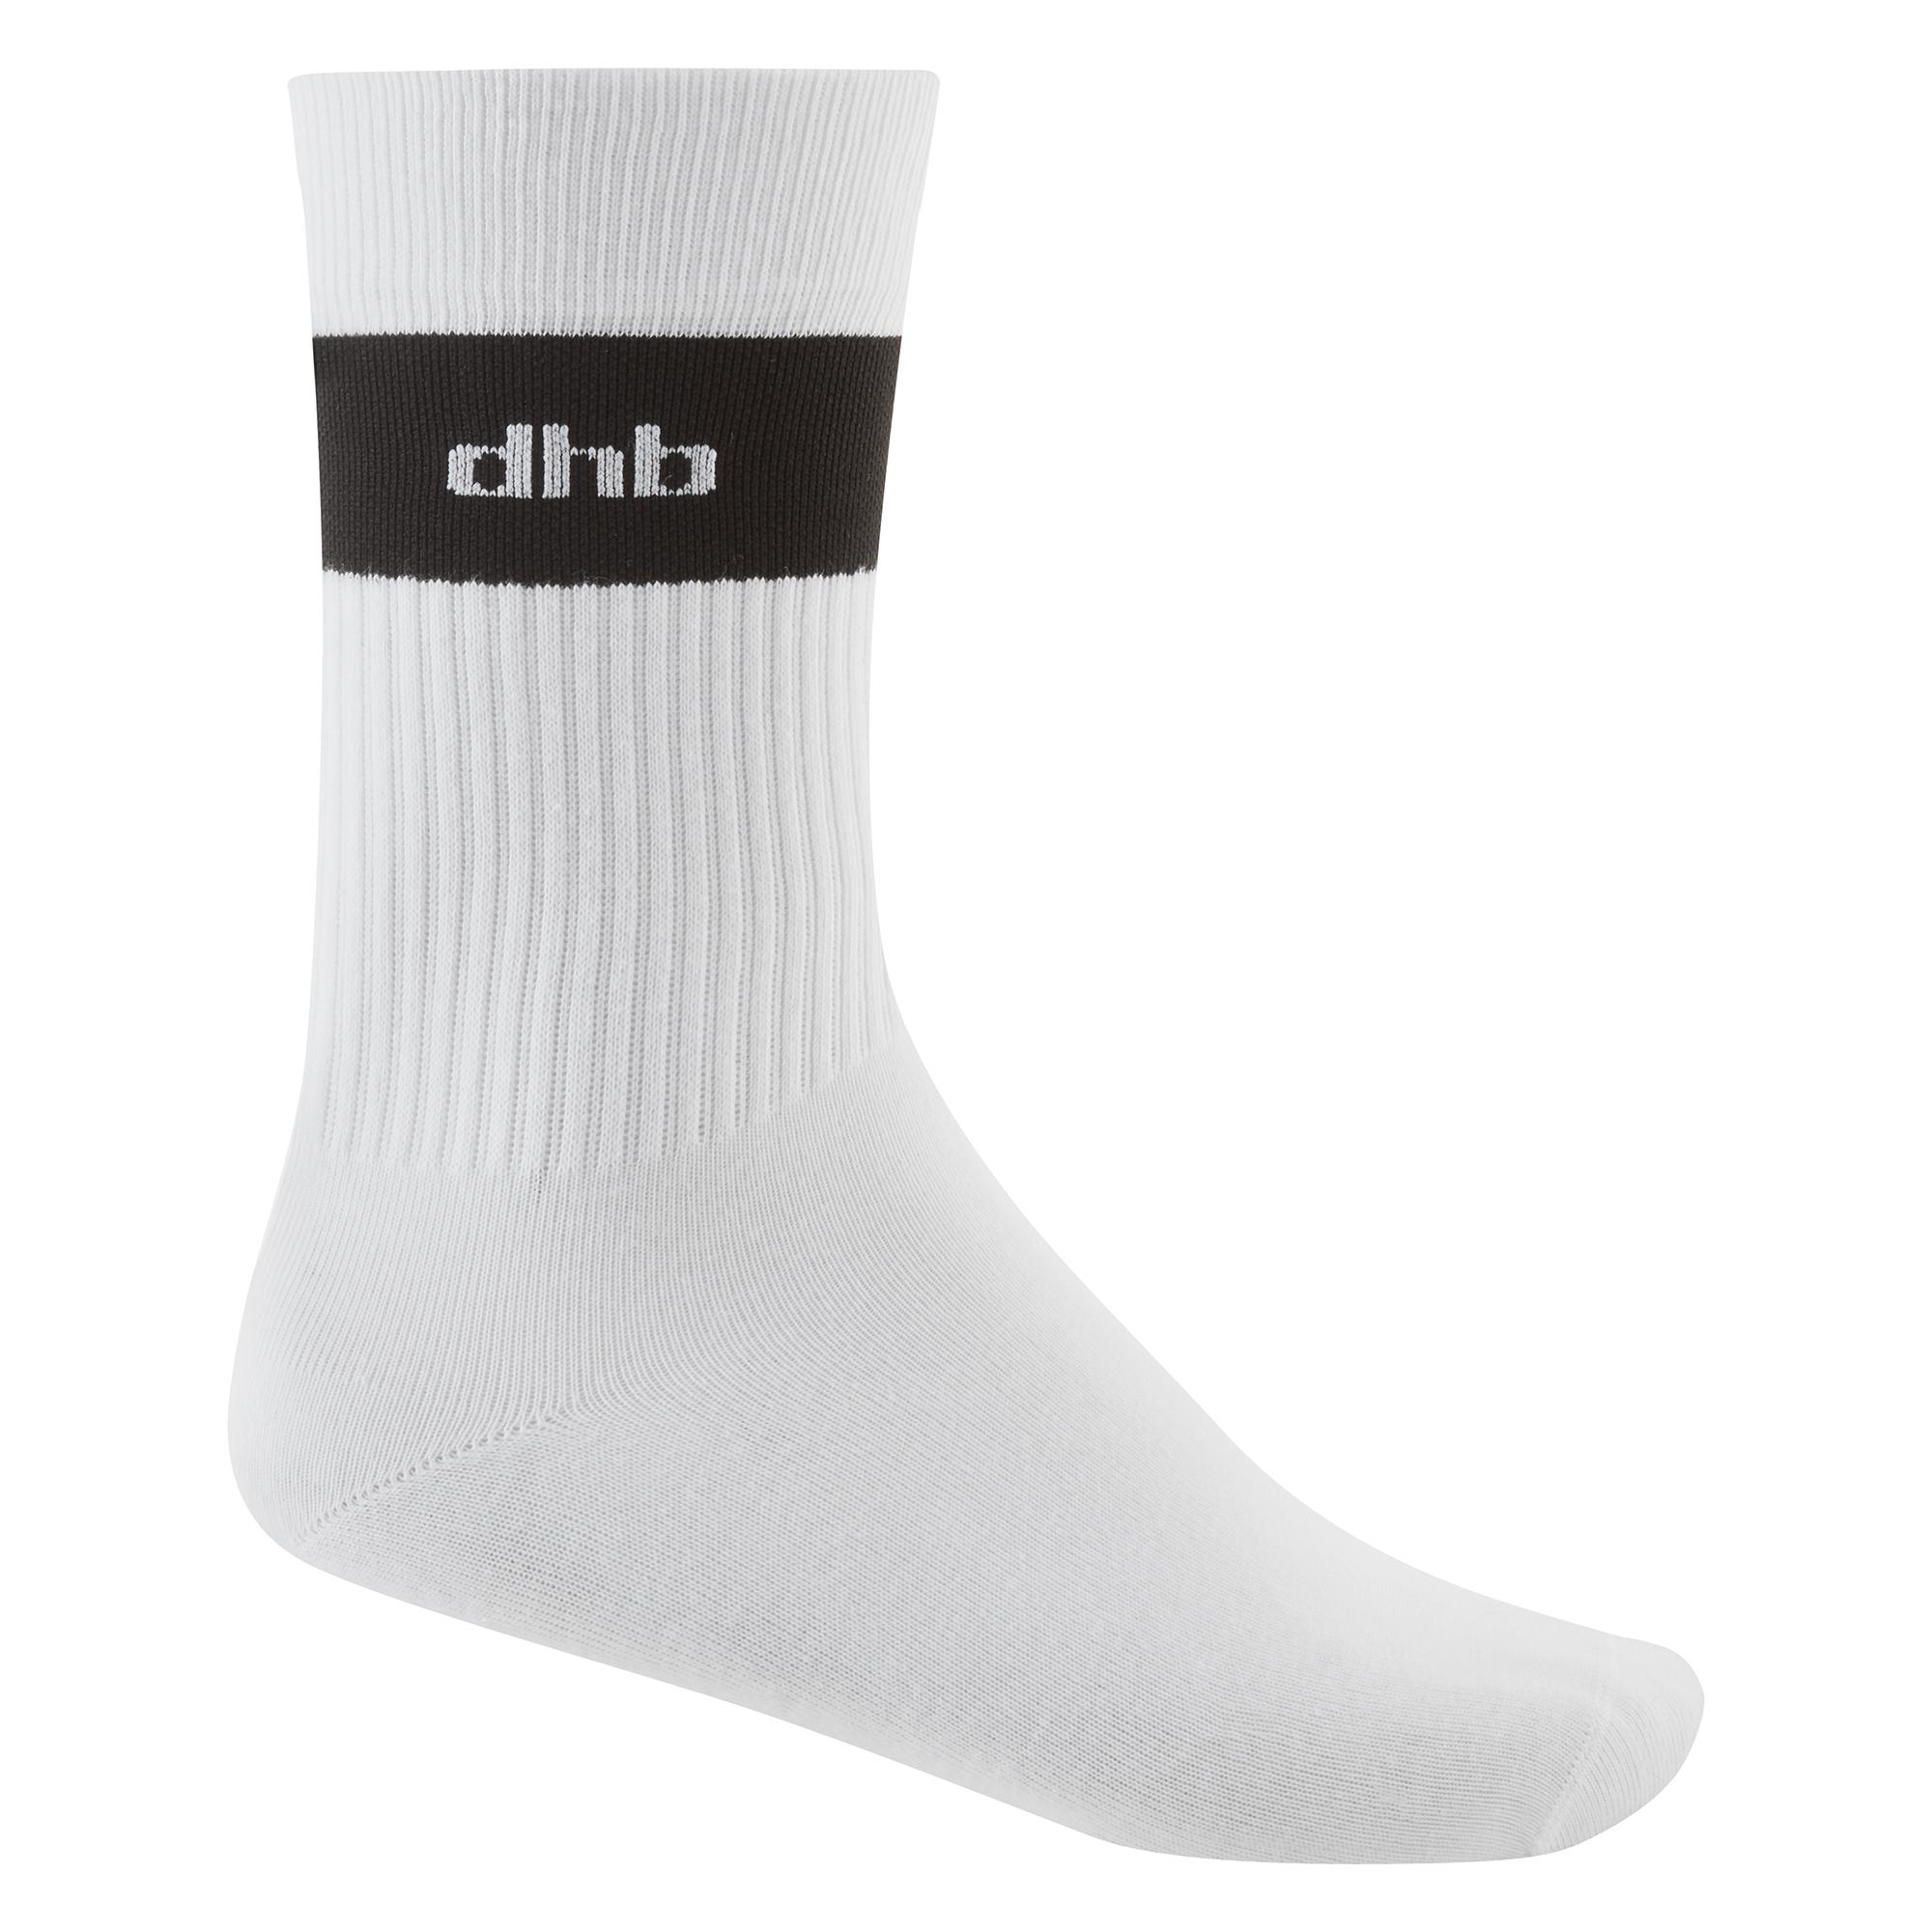 Dhb Training Socks - White